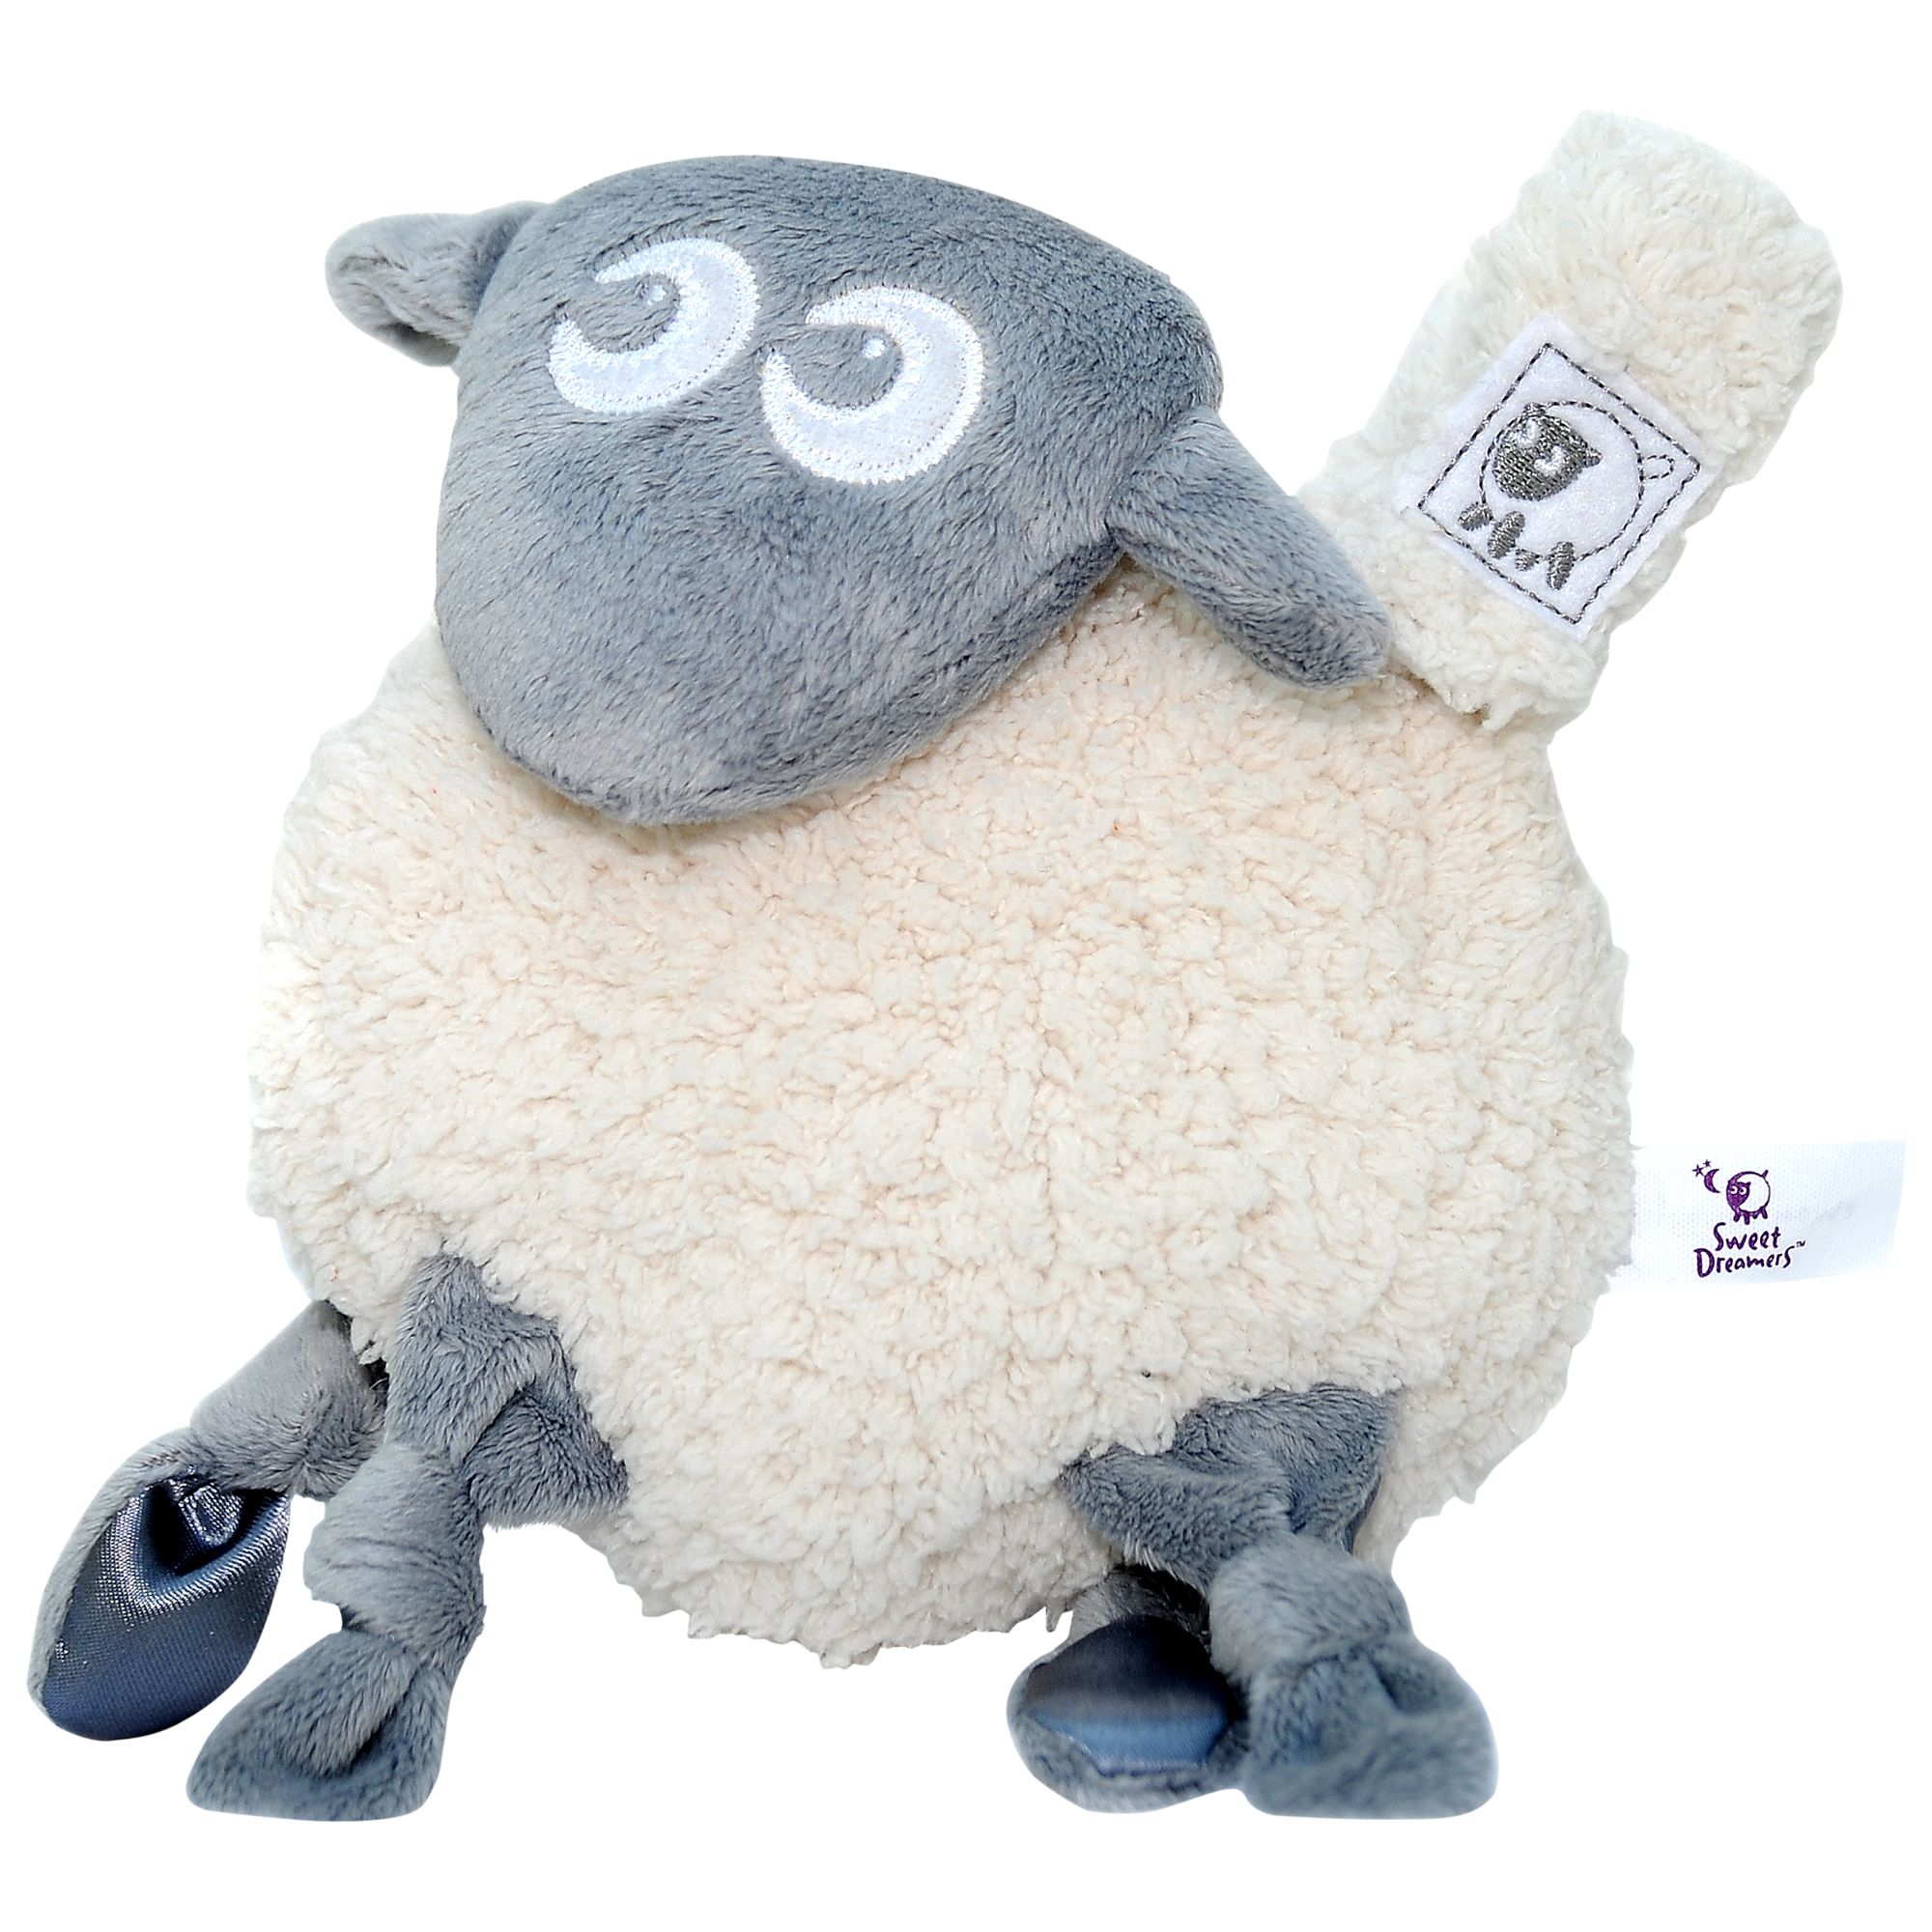 Ewan The Dream Sheep Snuggly Baby 